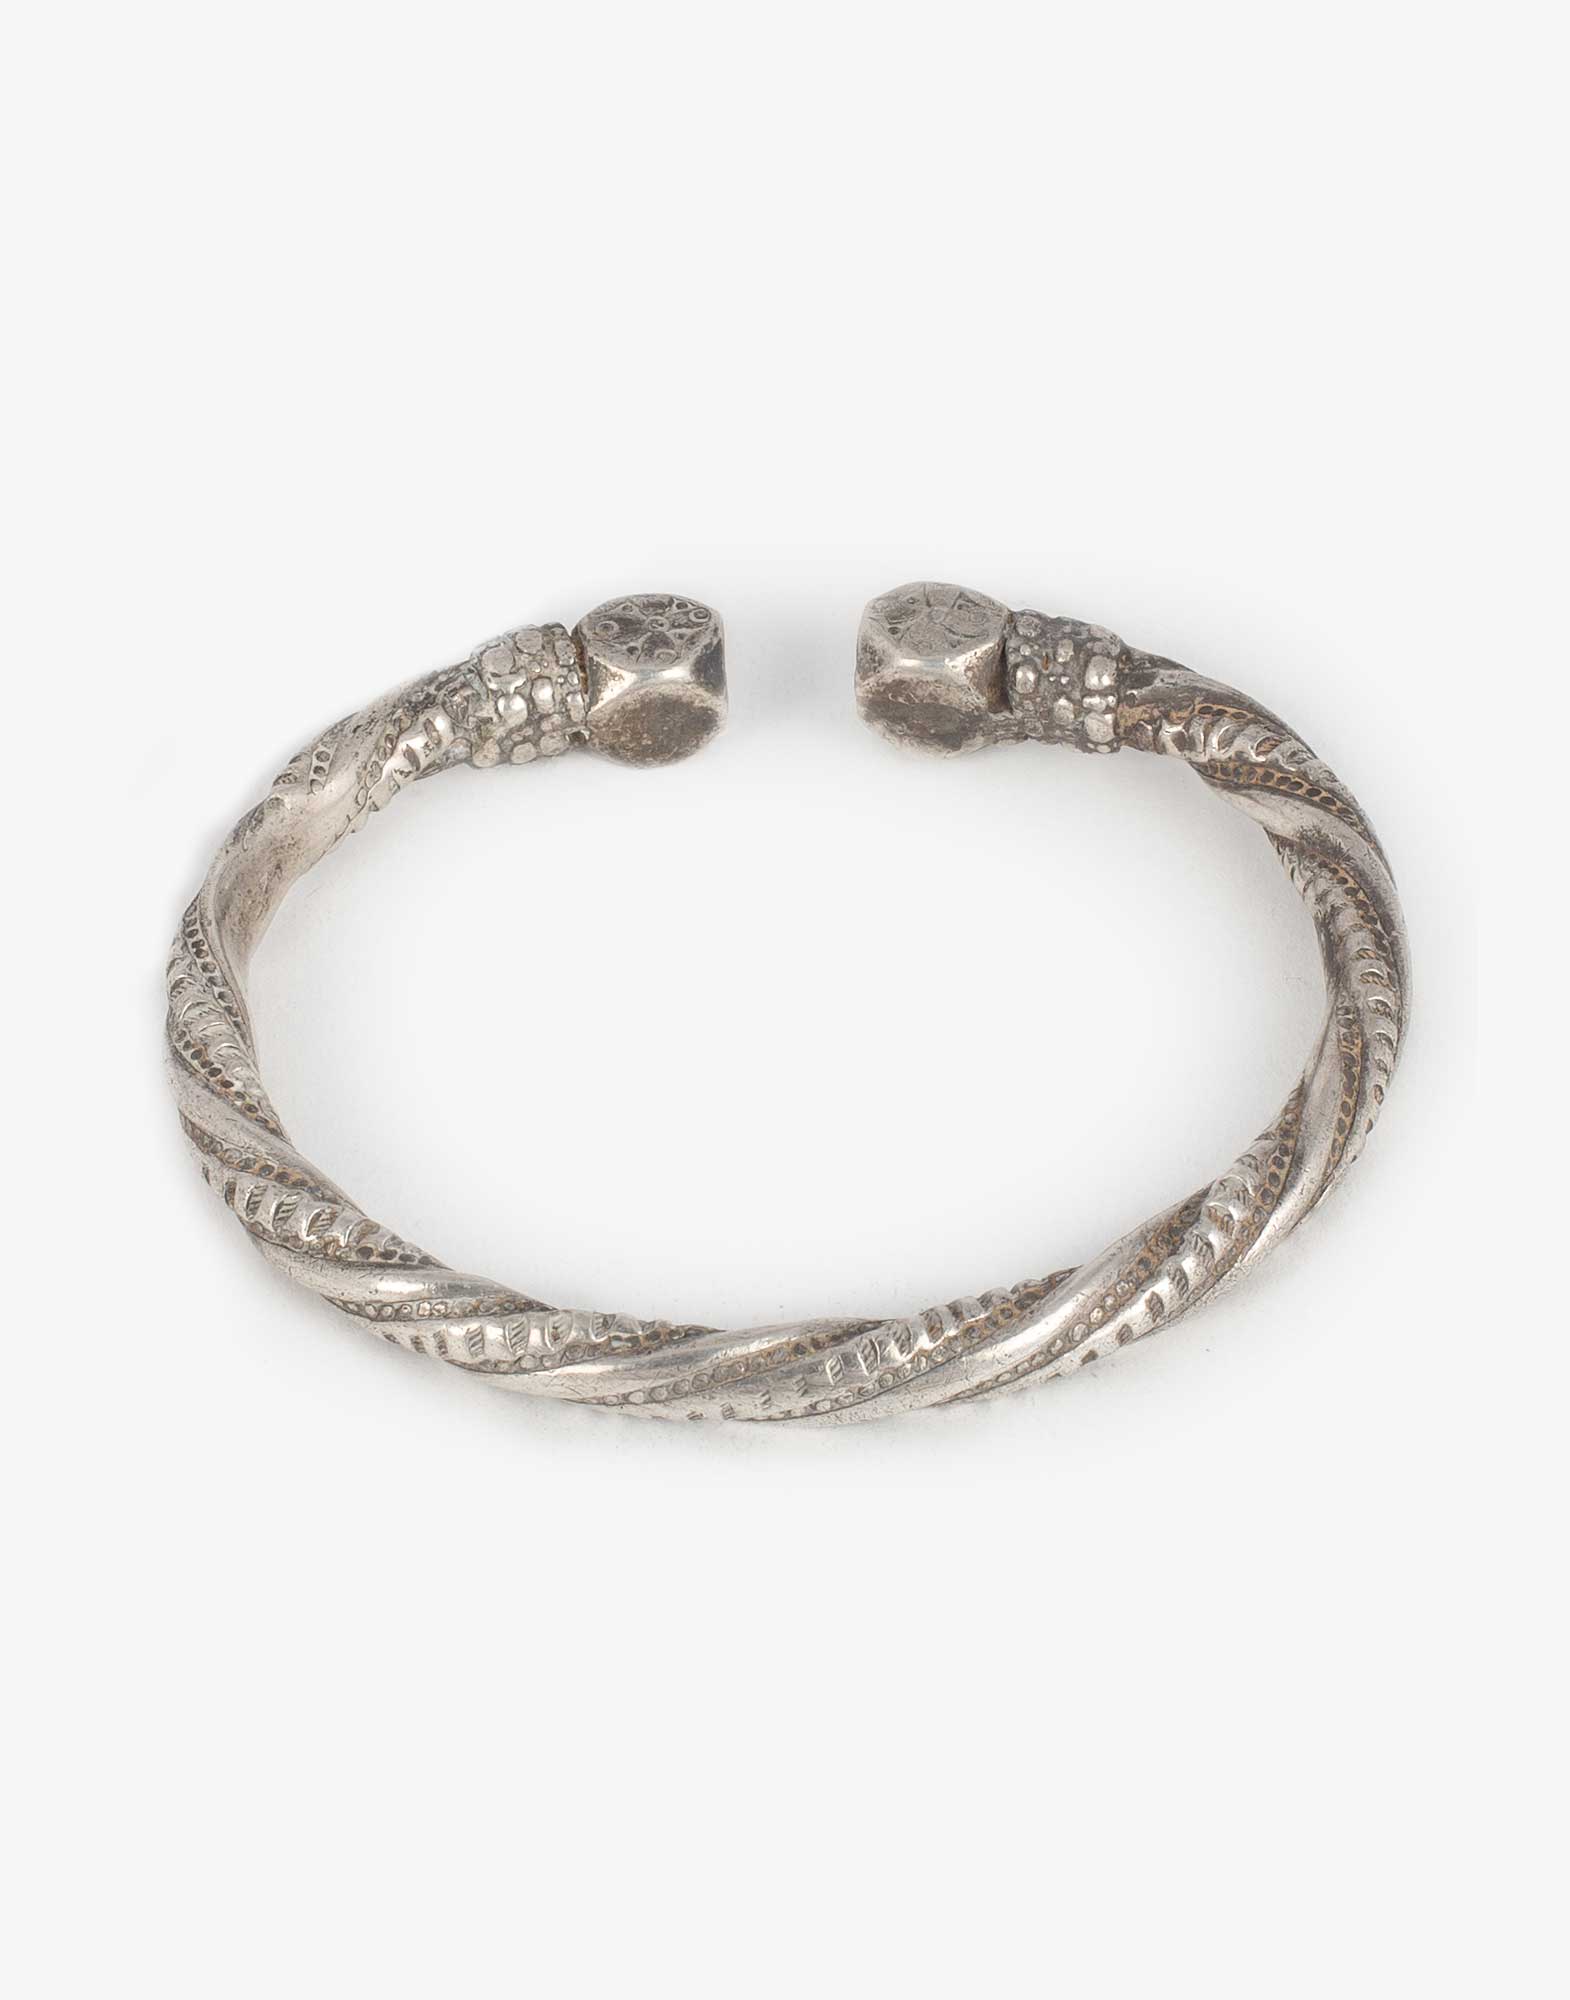 Antique Silver Bracelet Bangle